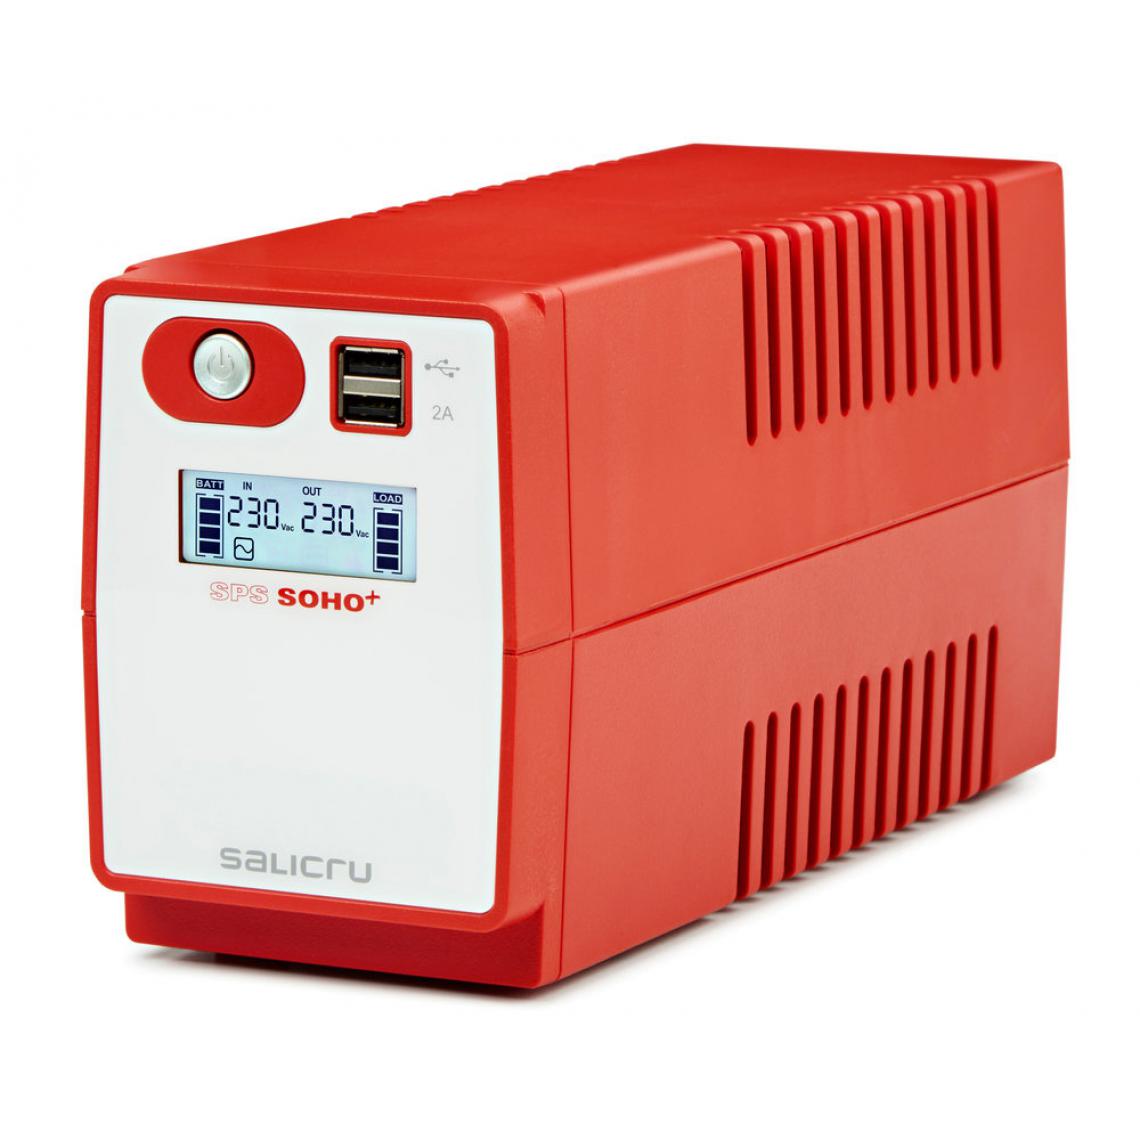 Salicru - Onduleur Salicru SPS 650 SOHO+ IEC (650VA/360Watts) - Line-Interactive 4 prises IEC(C13) USB Protection surcharge - Onduleur